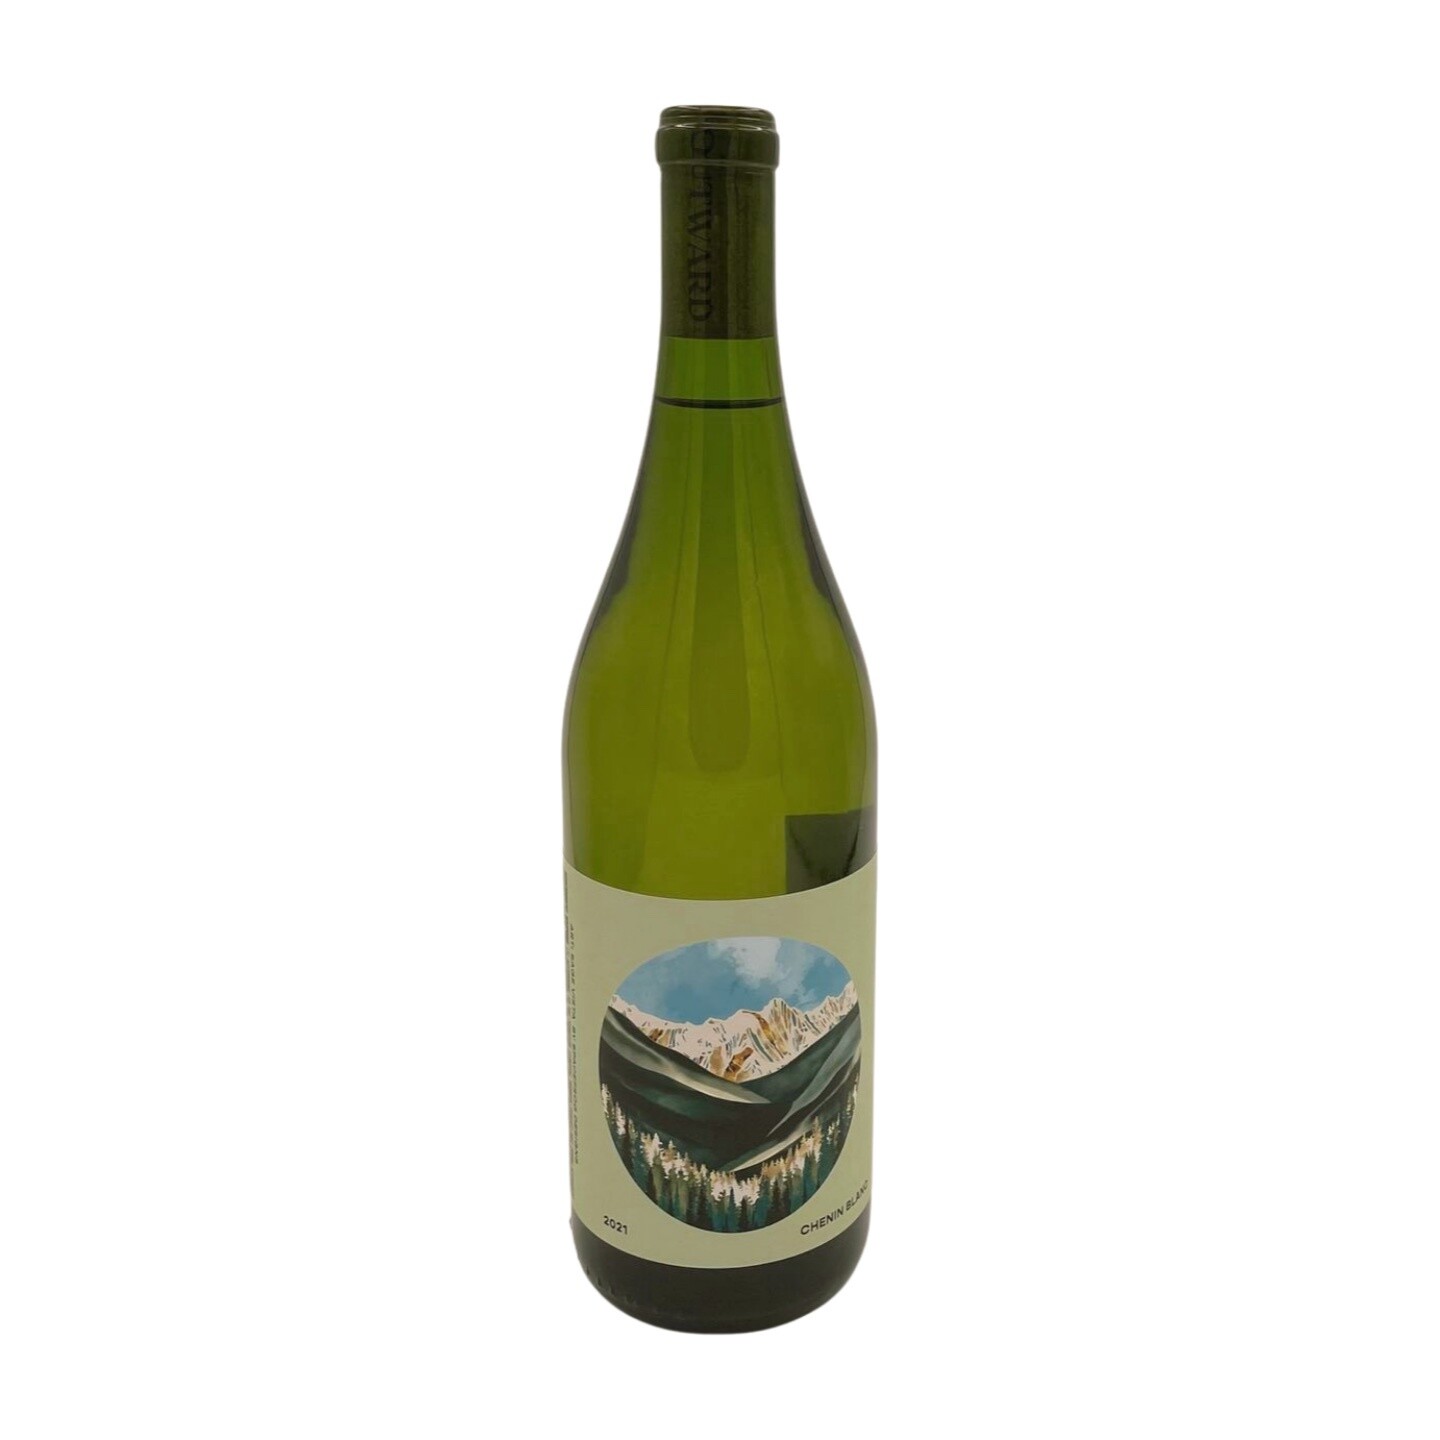 Outward Wines Chenin Blanc Cat Canyon Vineyard Santa Barbara County